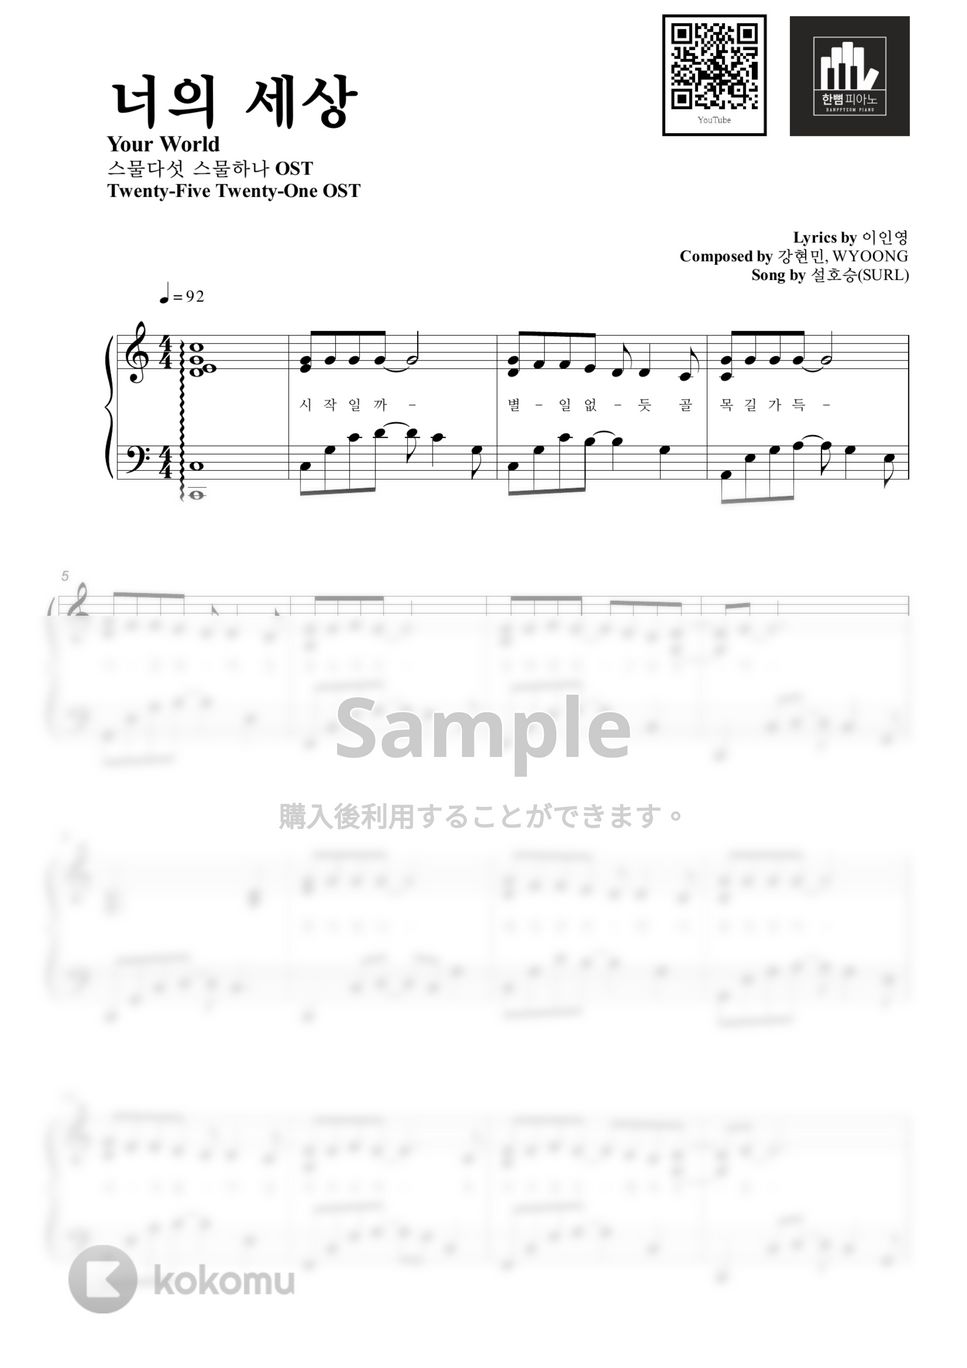 Twenty-Five Twenty-One - Your World(너의 세상) (PIANO COVER) by HANPPYEOMPIANO